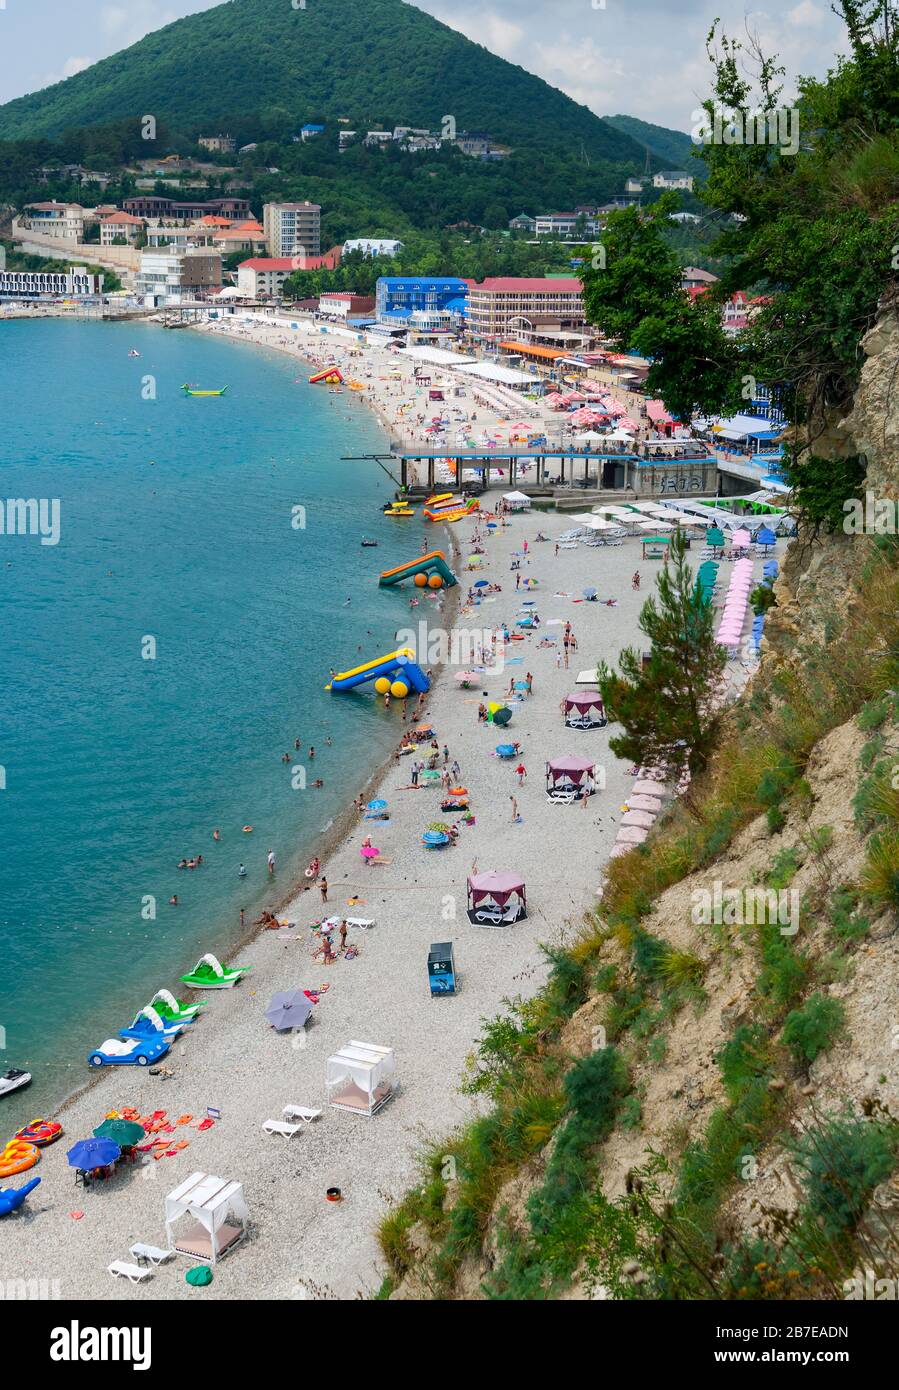 Crowds of bathers on the beach at Black Sea. Olginka. Krasnodar Krai, Russia. Stock Photo